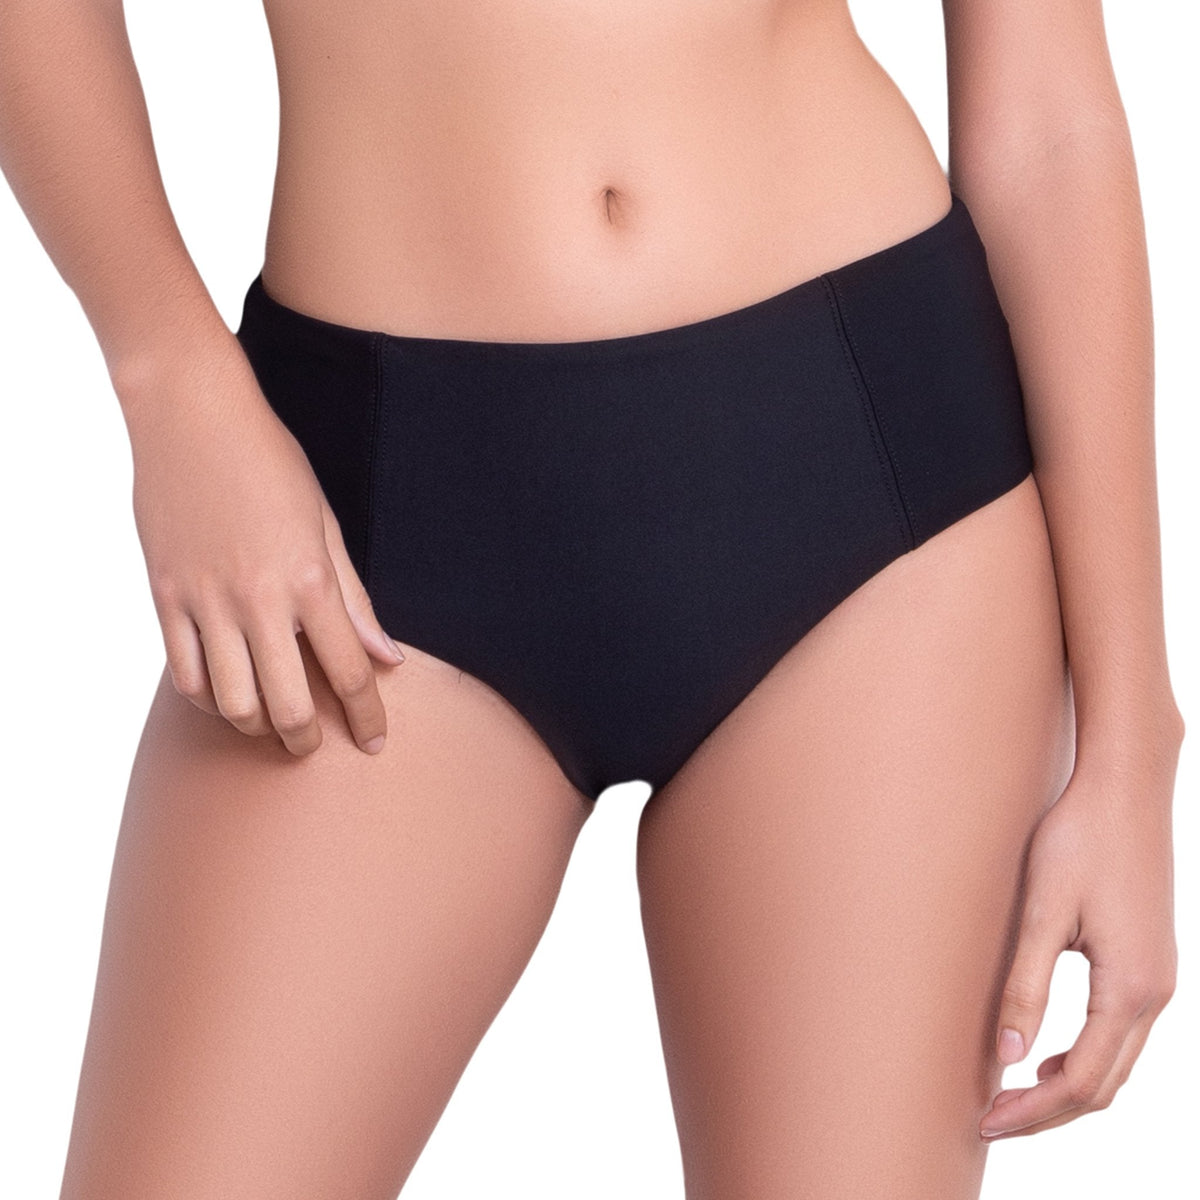 L√âA High rise panty, solid black bikini bottom by ALMA swimwear ‚Äì front view 3